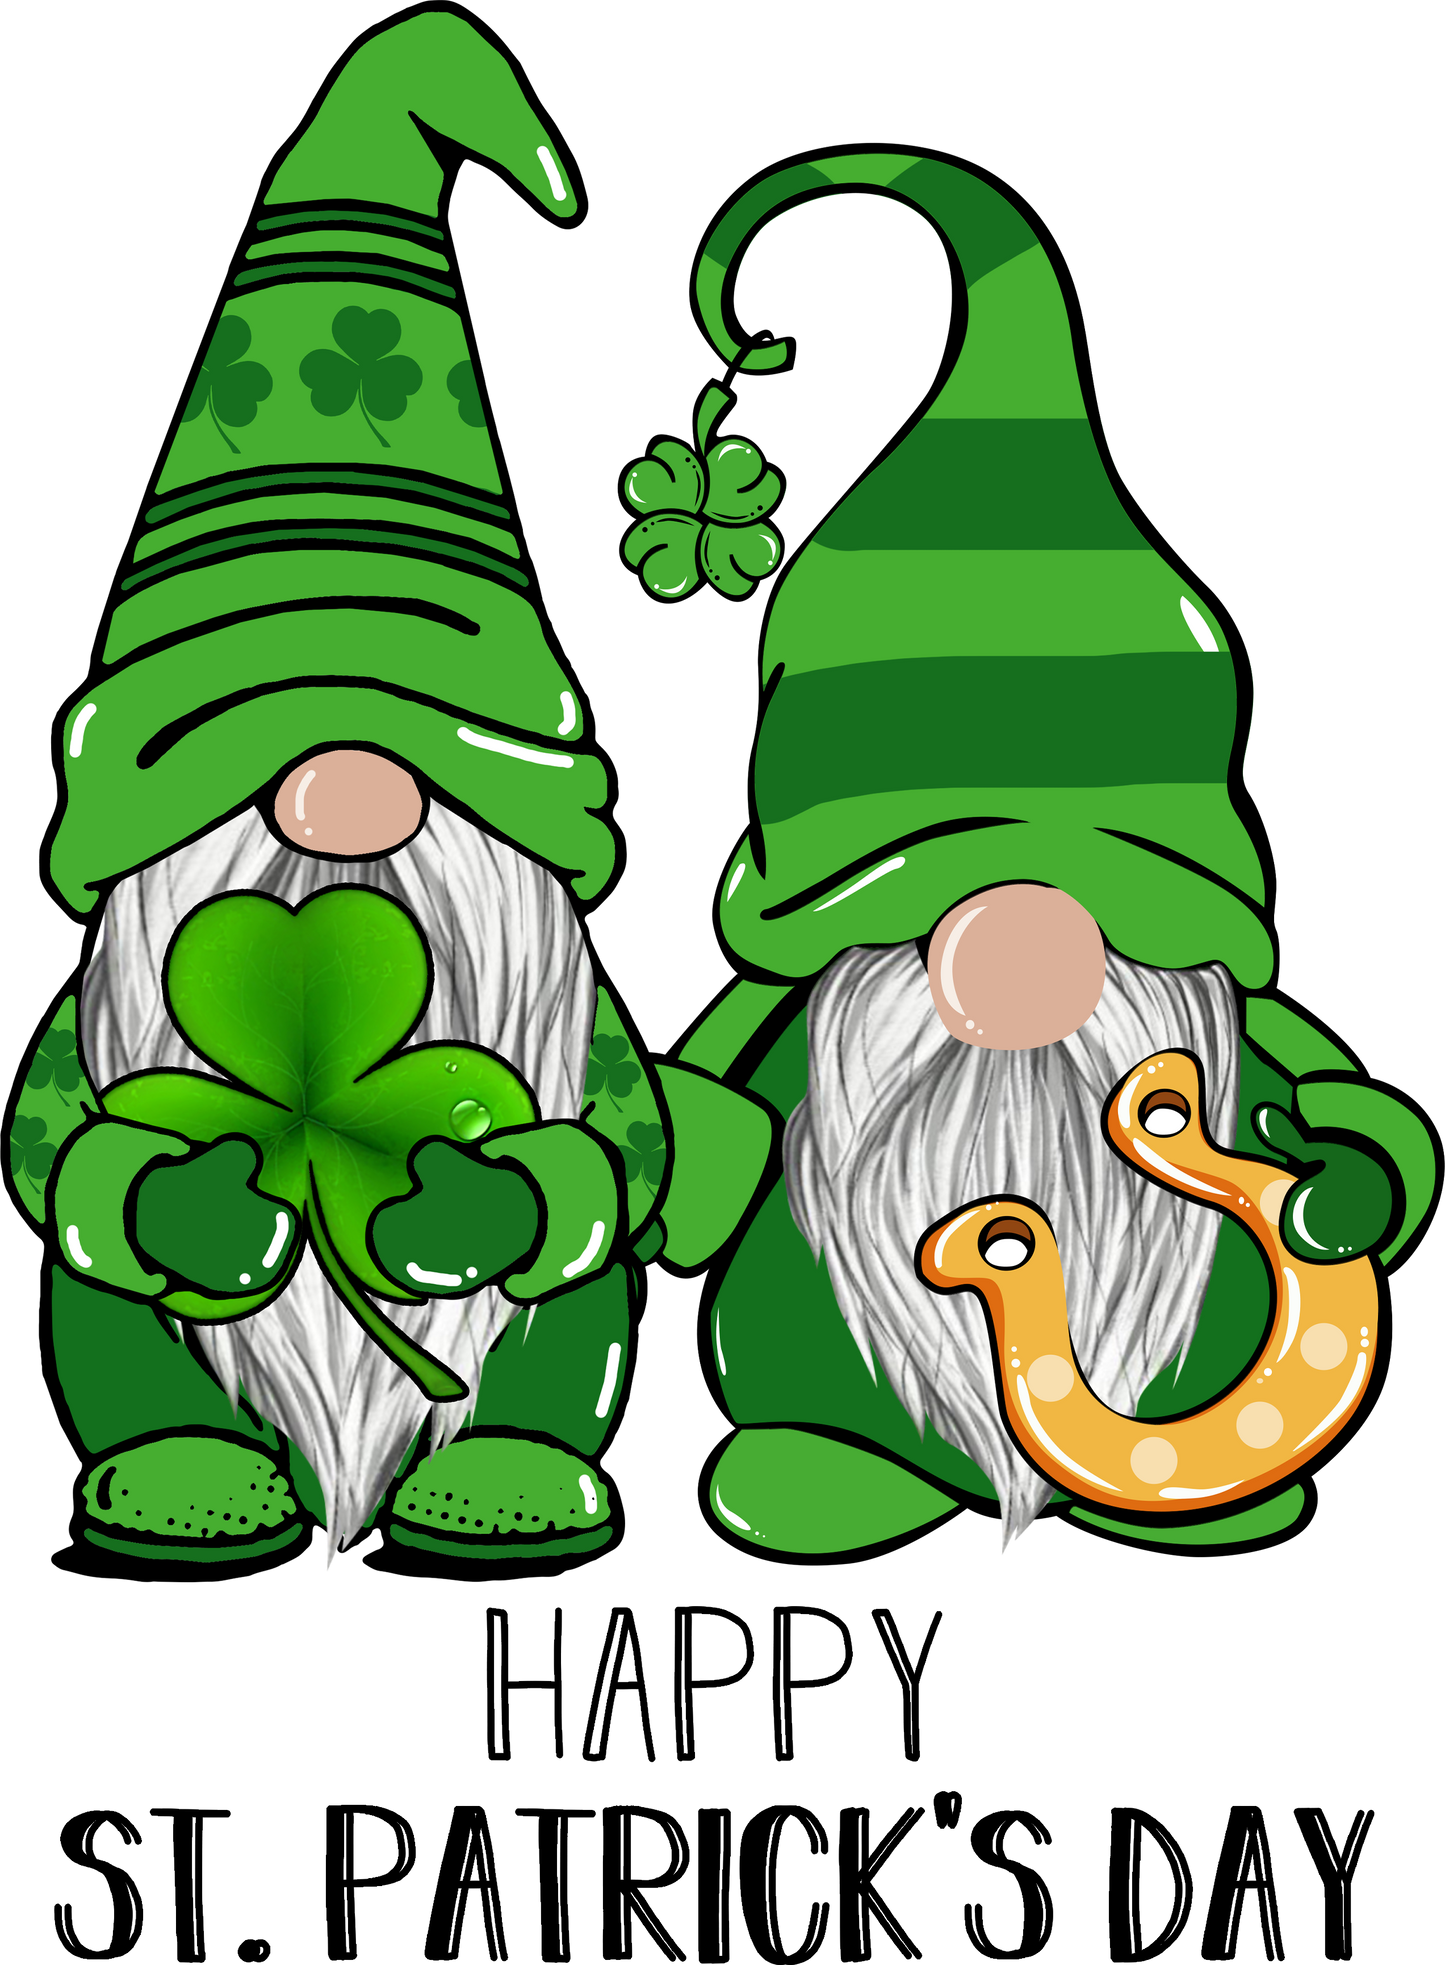 Copy of Happy St. Patrick's Day Gnomes 2 DTF